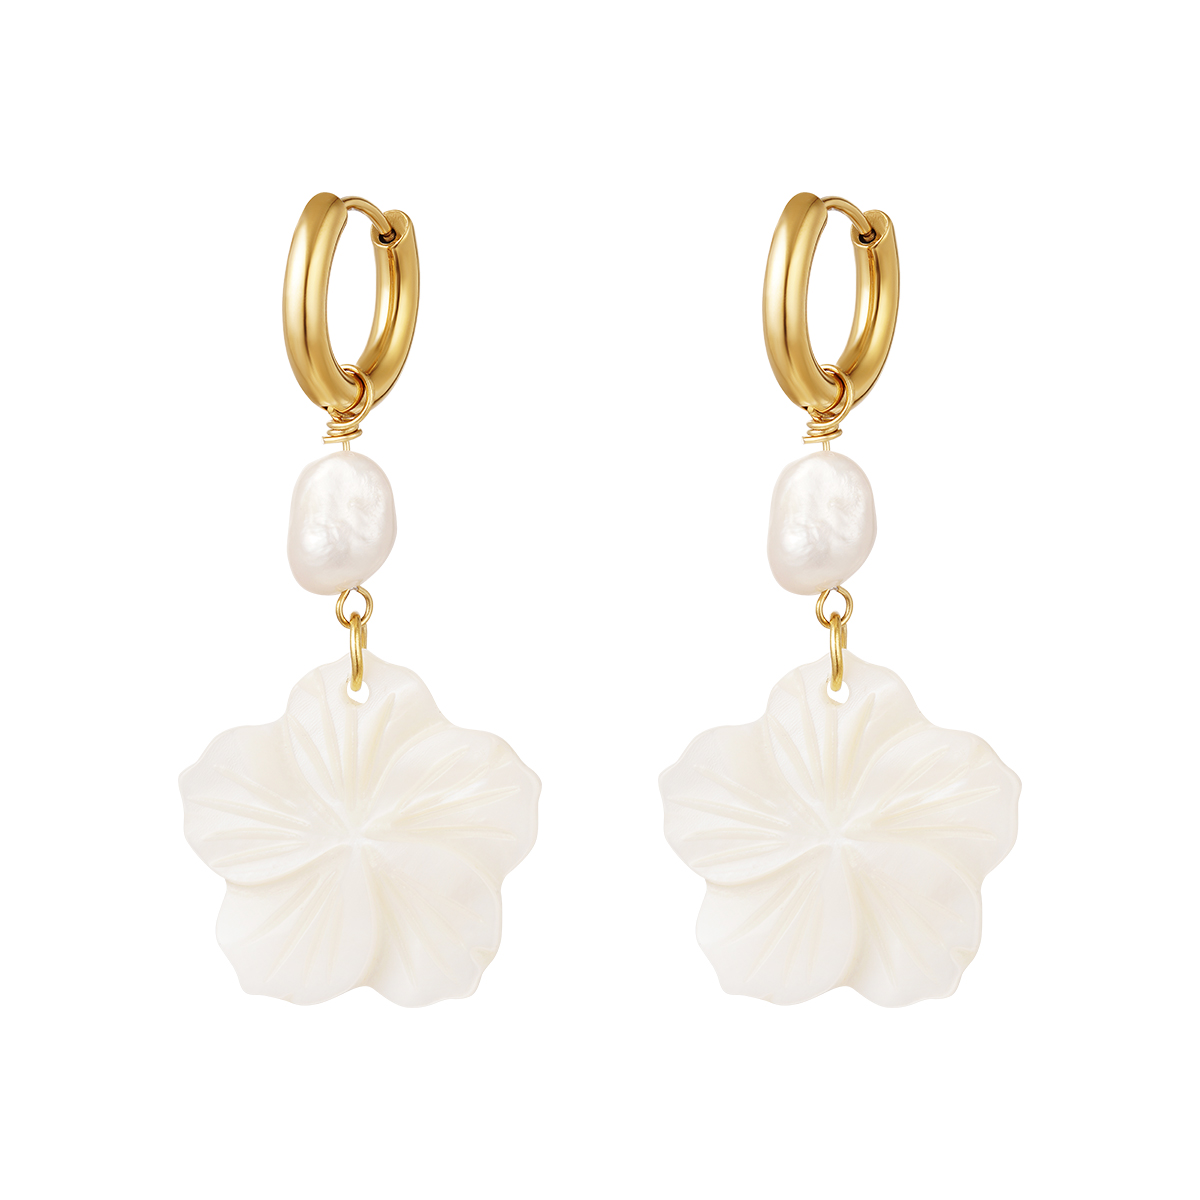 Flower earrings - Beach collection